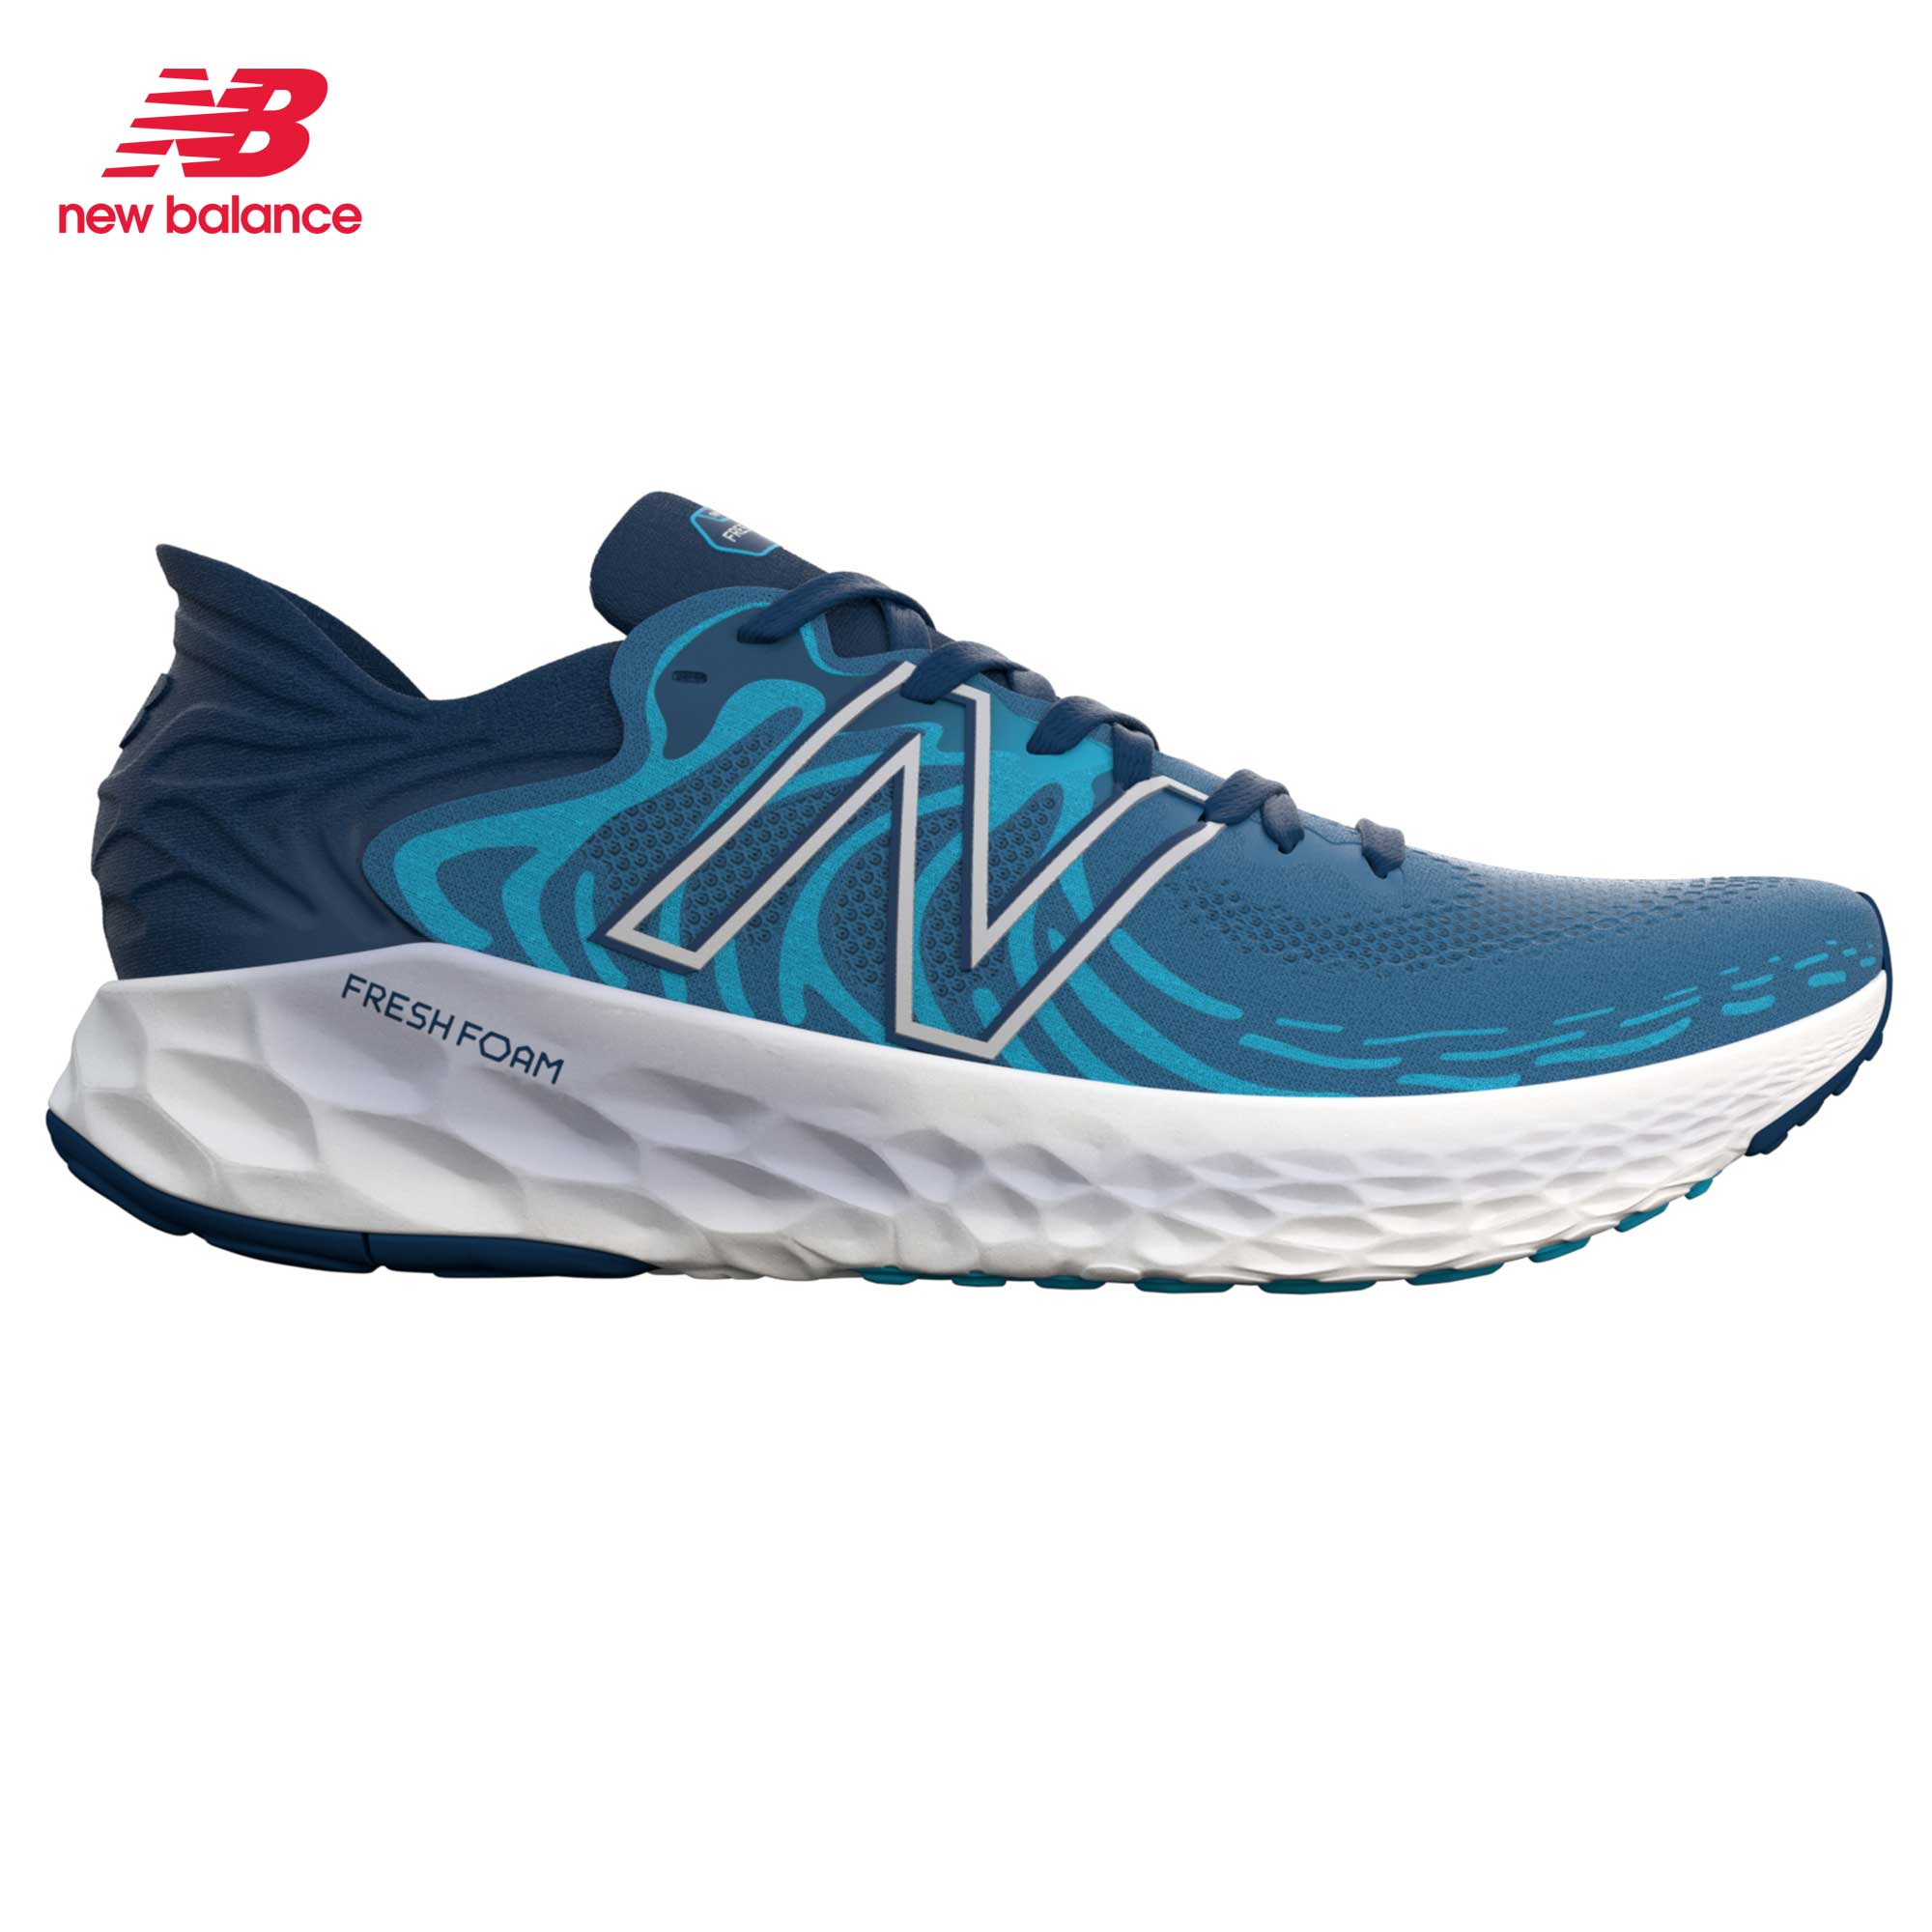 Buy New Balance Running Shoes Online | lazada.com.ph